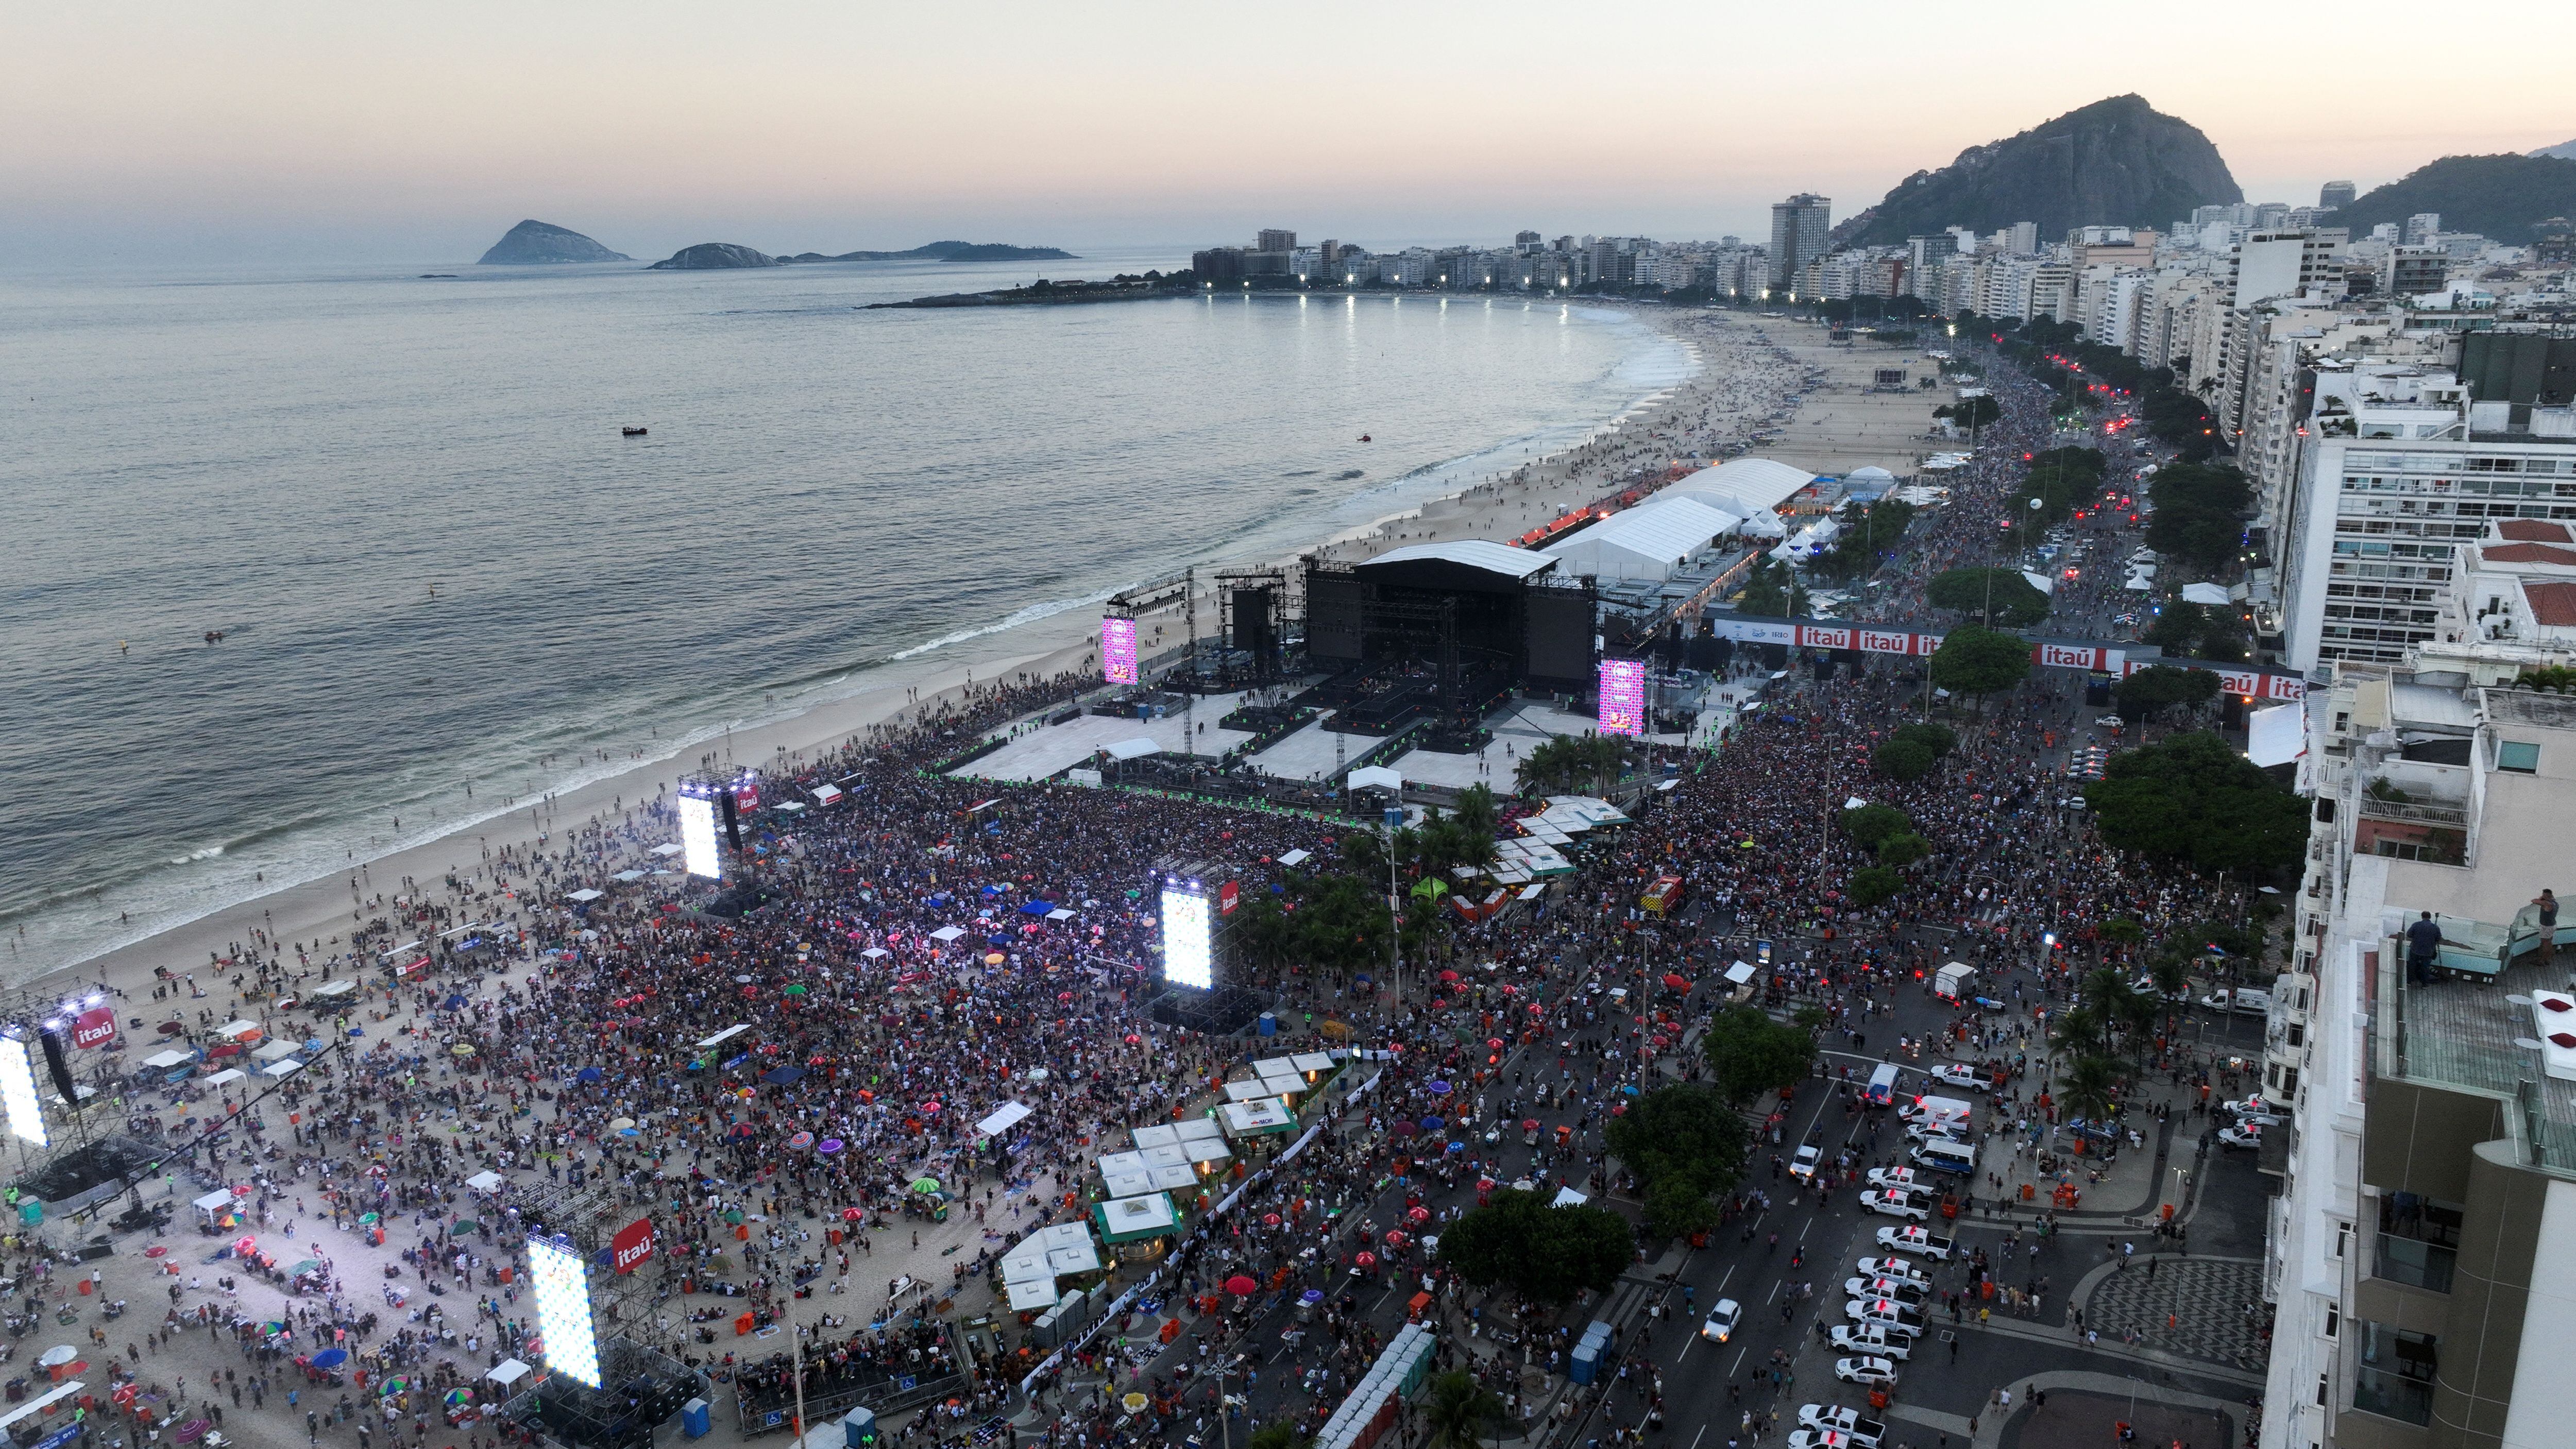 Así lucían las playas de Copacabana a la espera del show de Madonna (REUTERS/Leonardo Benassatto)